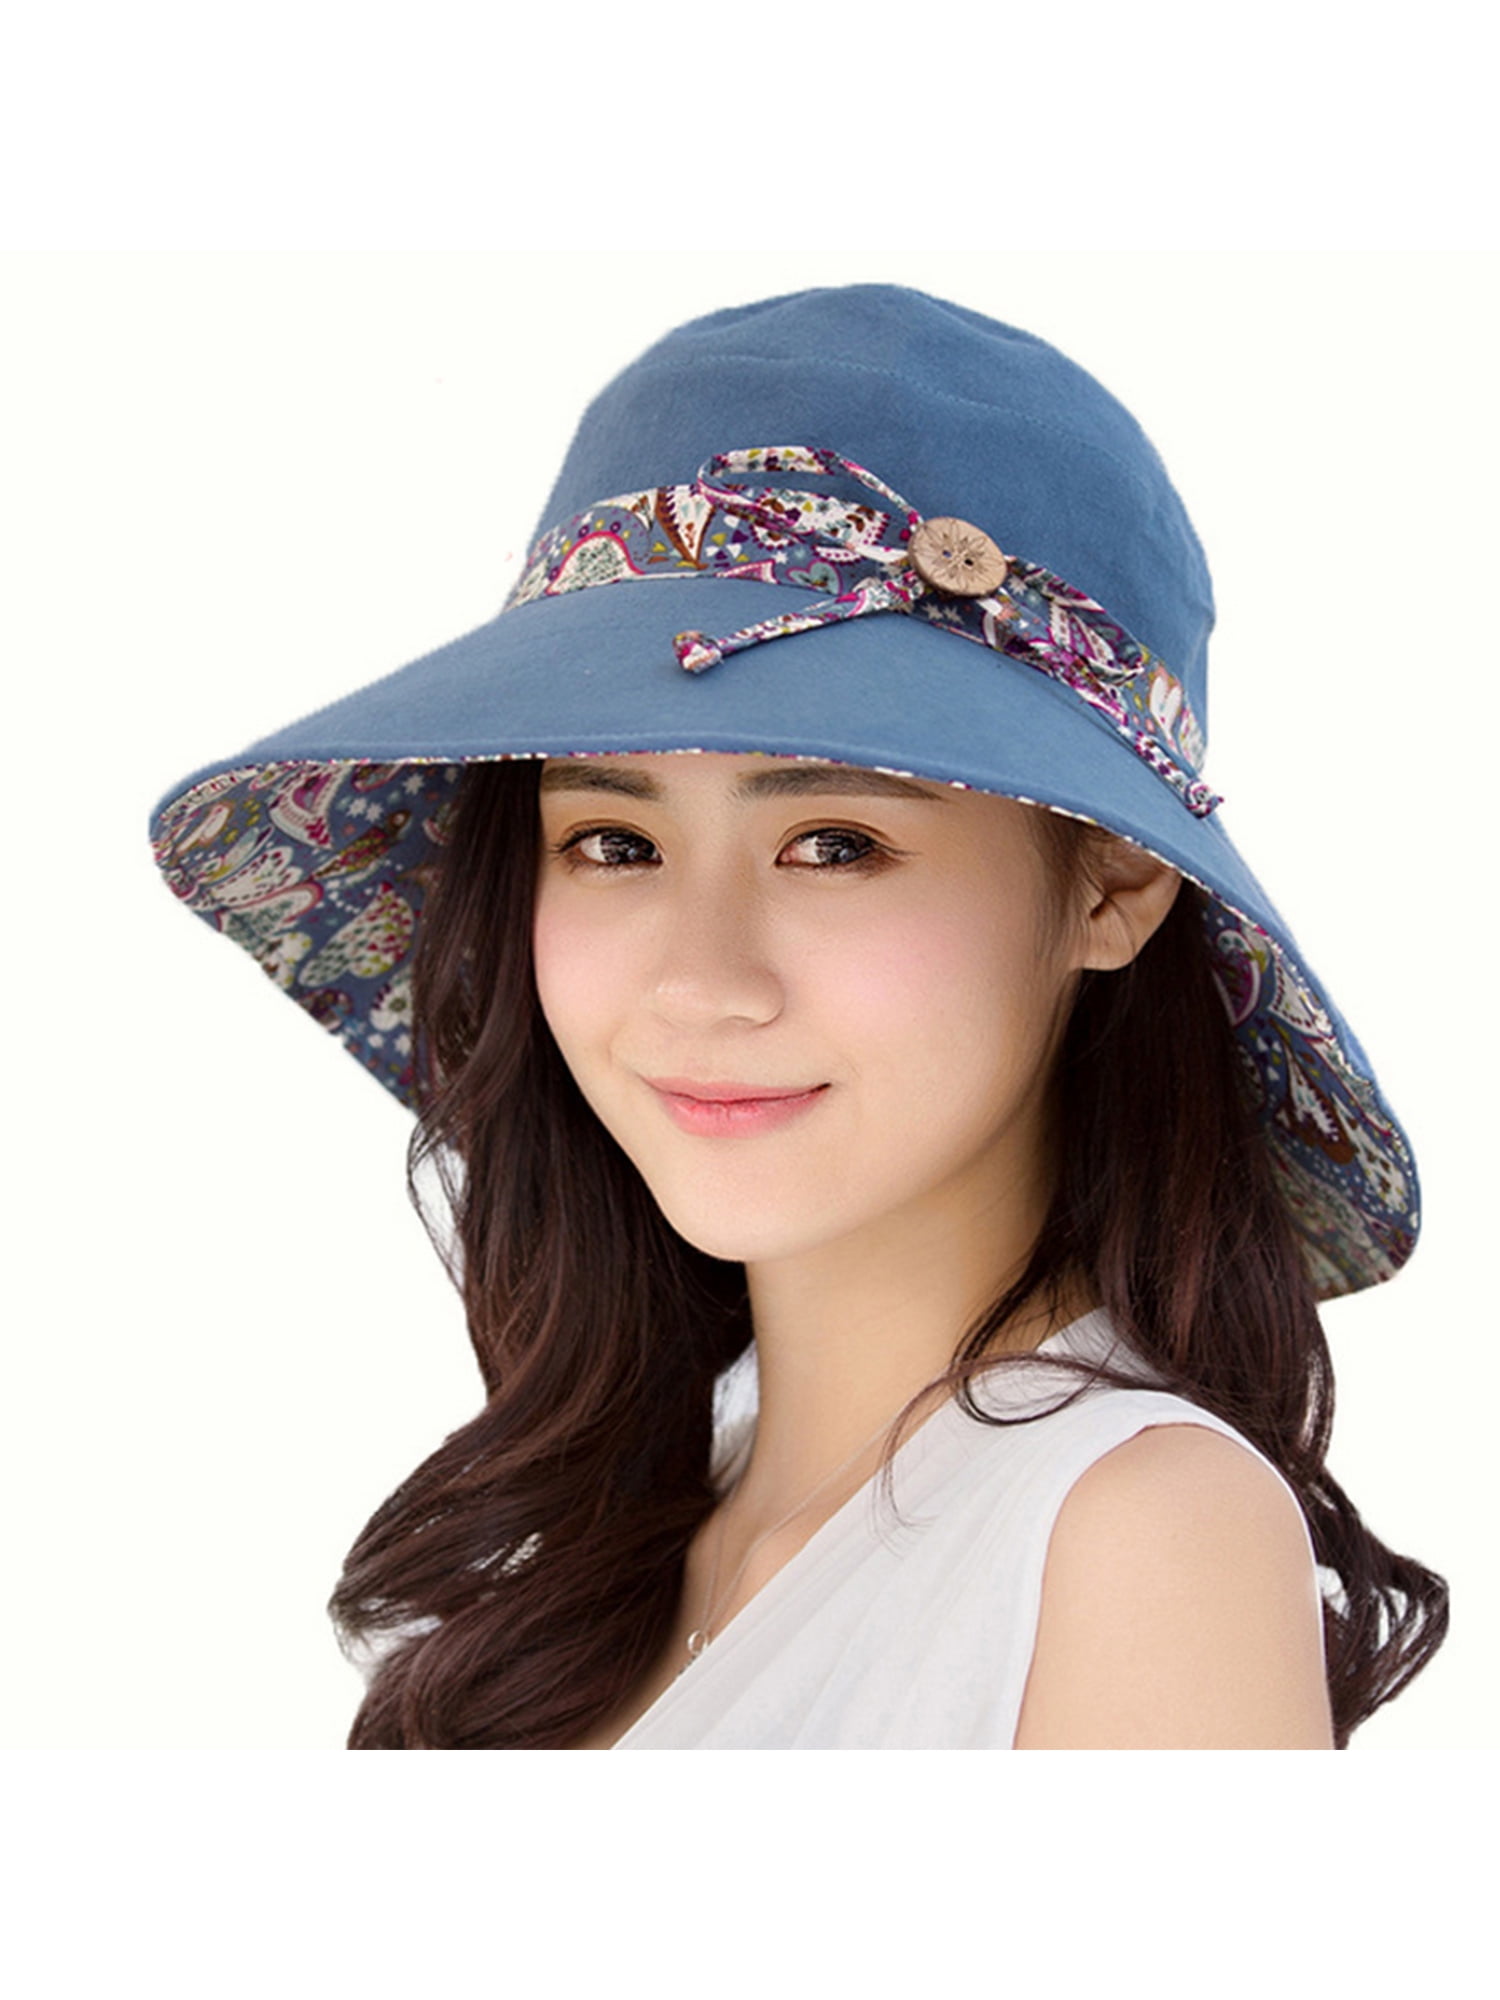 La Women Summer Casual Big Wide Brim Cotton Hat Floppy Derby Beach Sun Foldable Cap, Women's, Size: One size, Blue